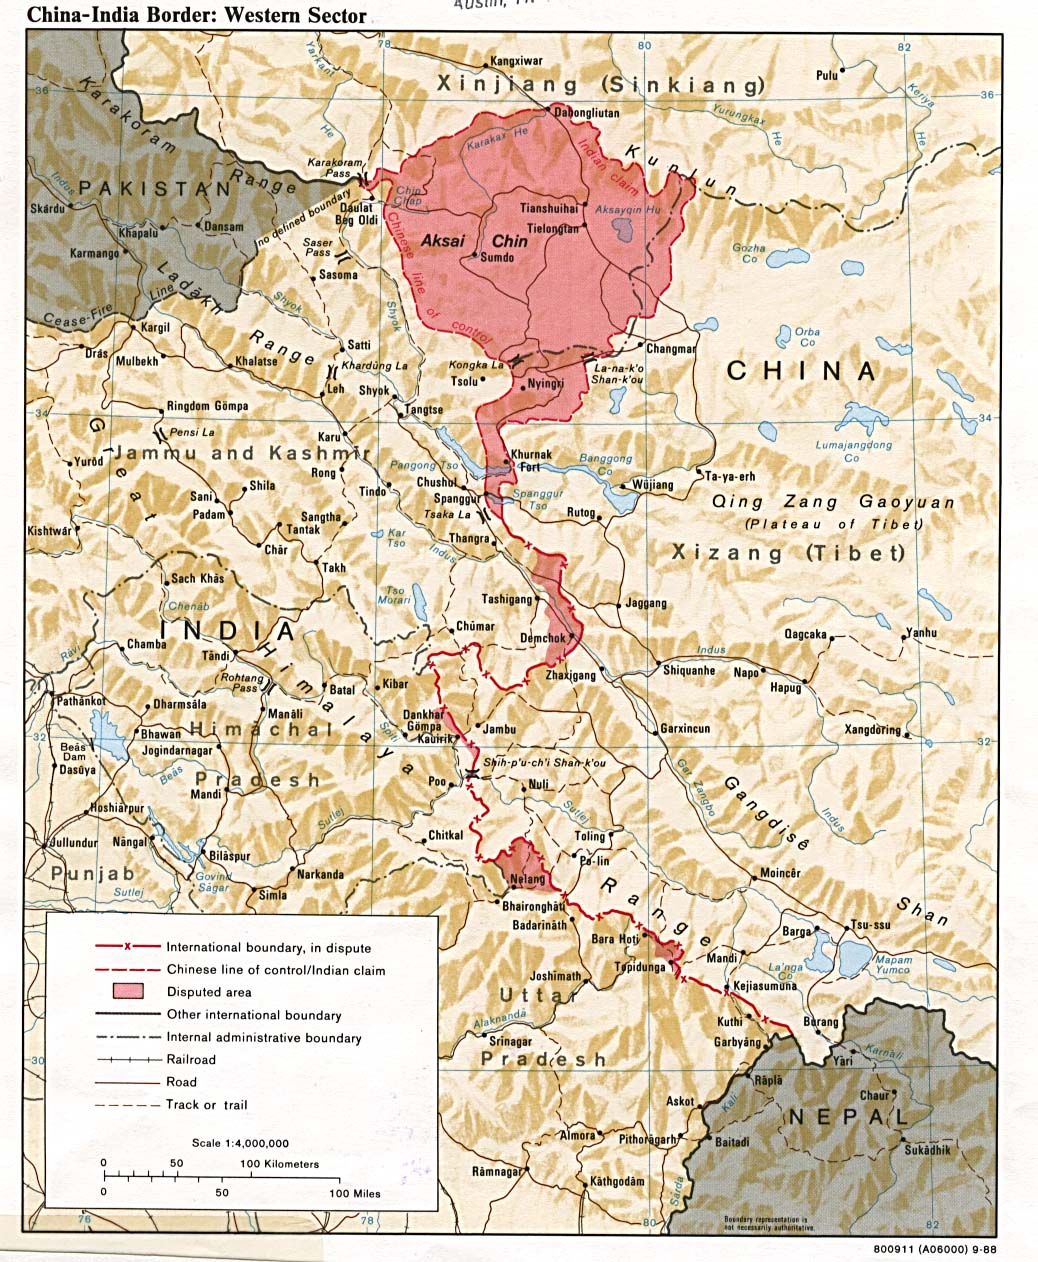                     'India-China Border: Western Sector' 
India_China_Kashmir_Border_(Ladhak)_Greater_Himalayas 